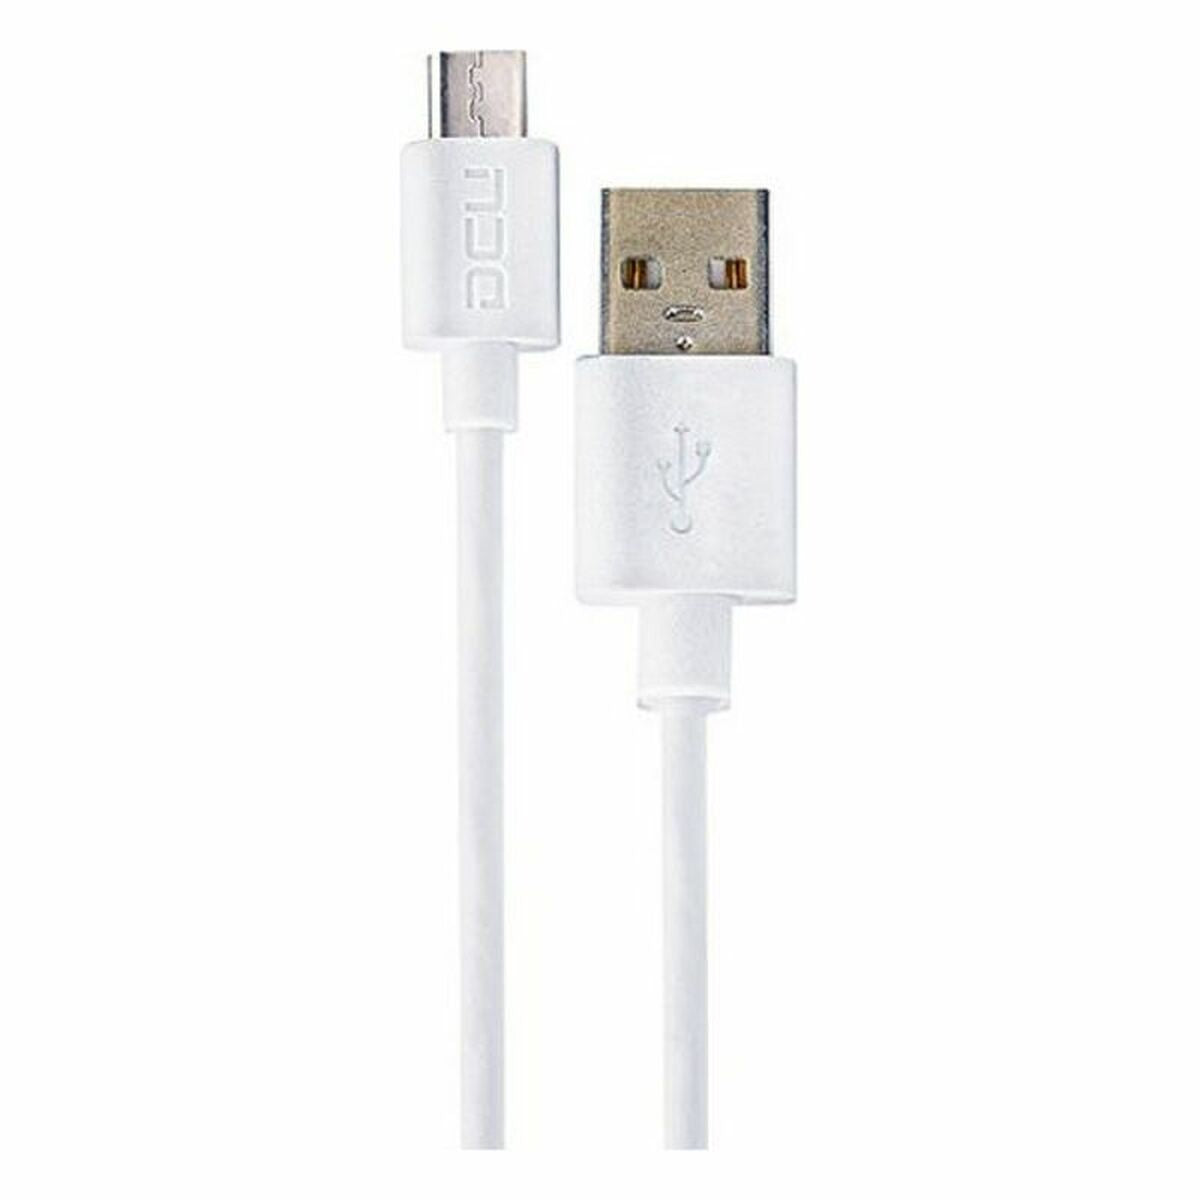 USB-zu-Micro-USB-Kabel DCU S0427512 (1M)